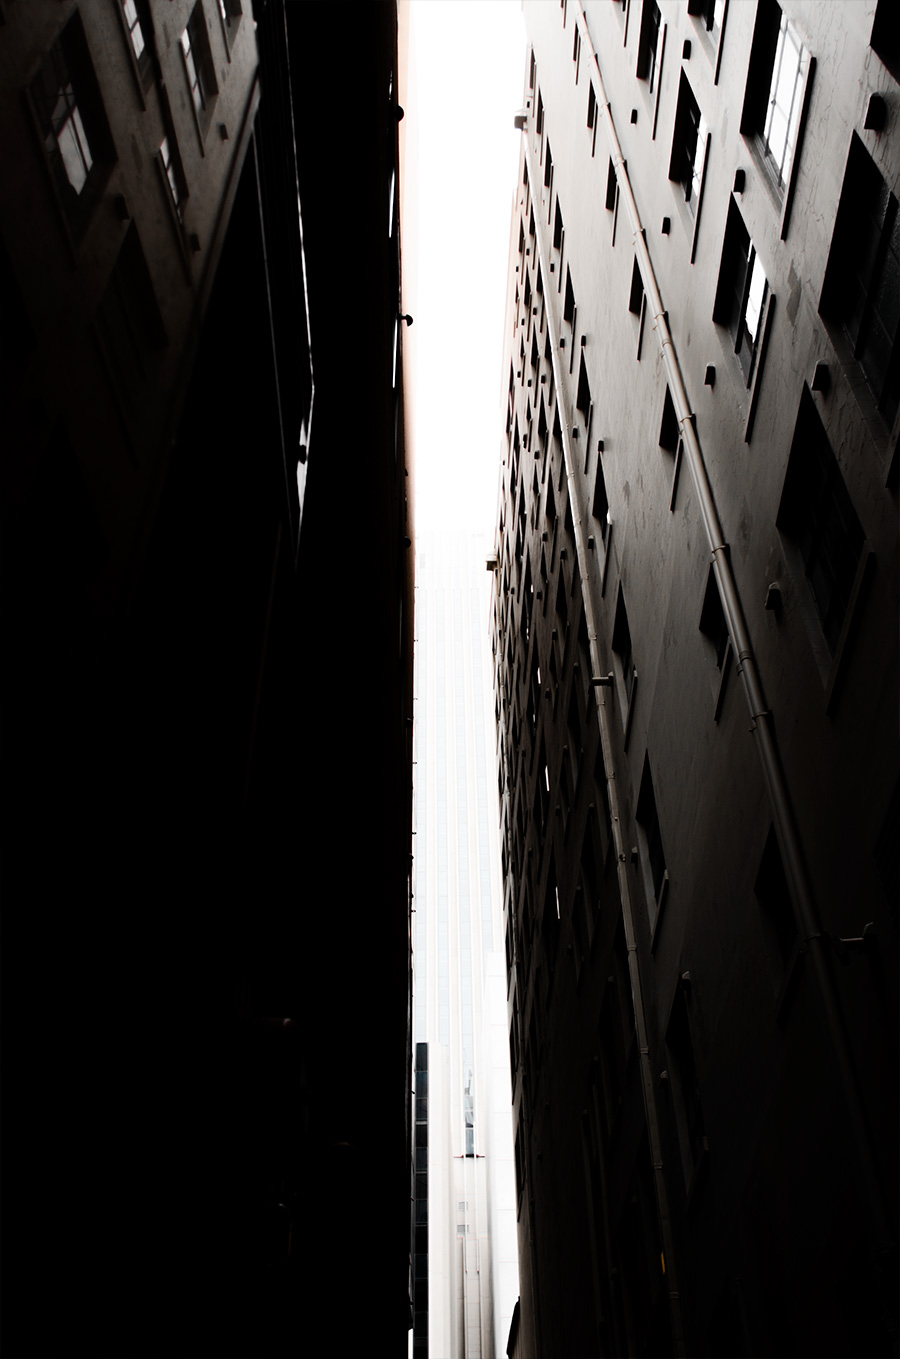 Skyline, Market Street (2015)